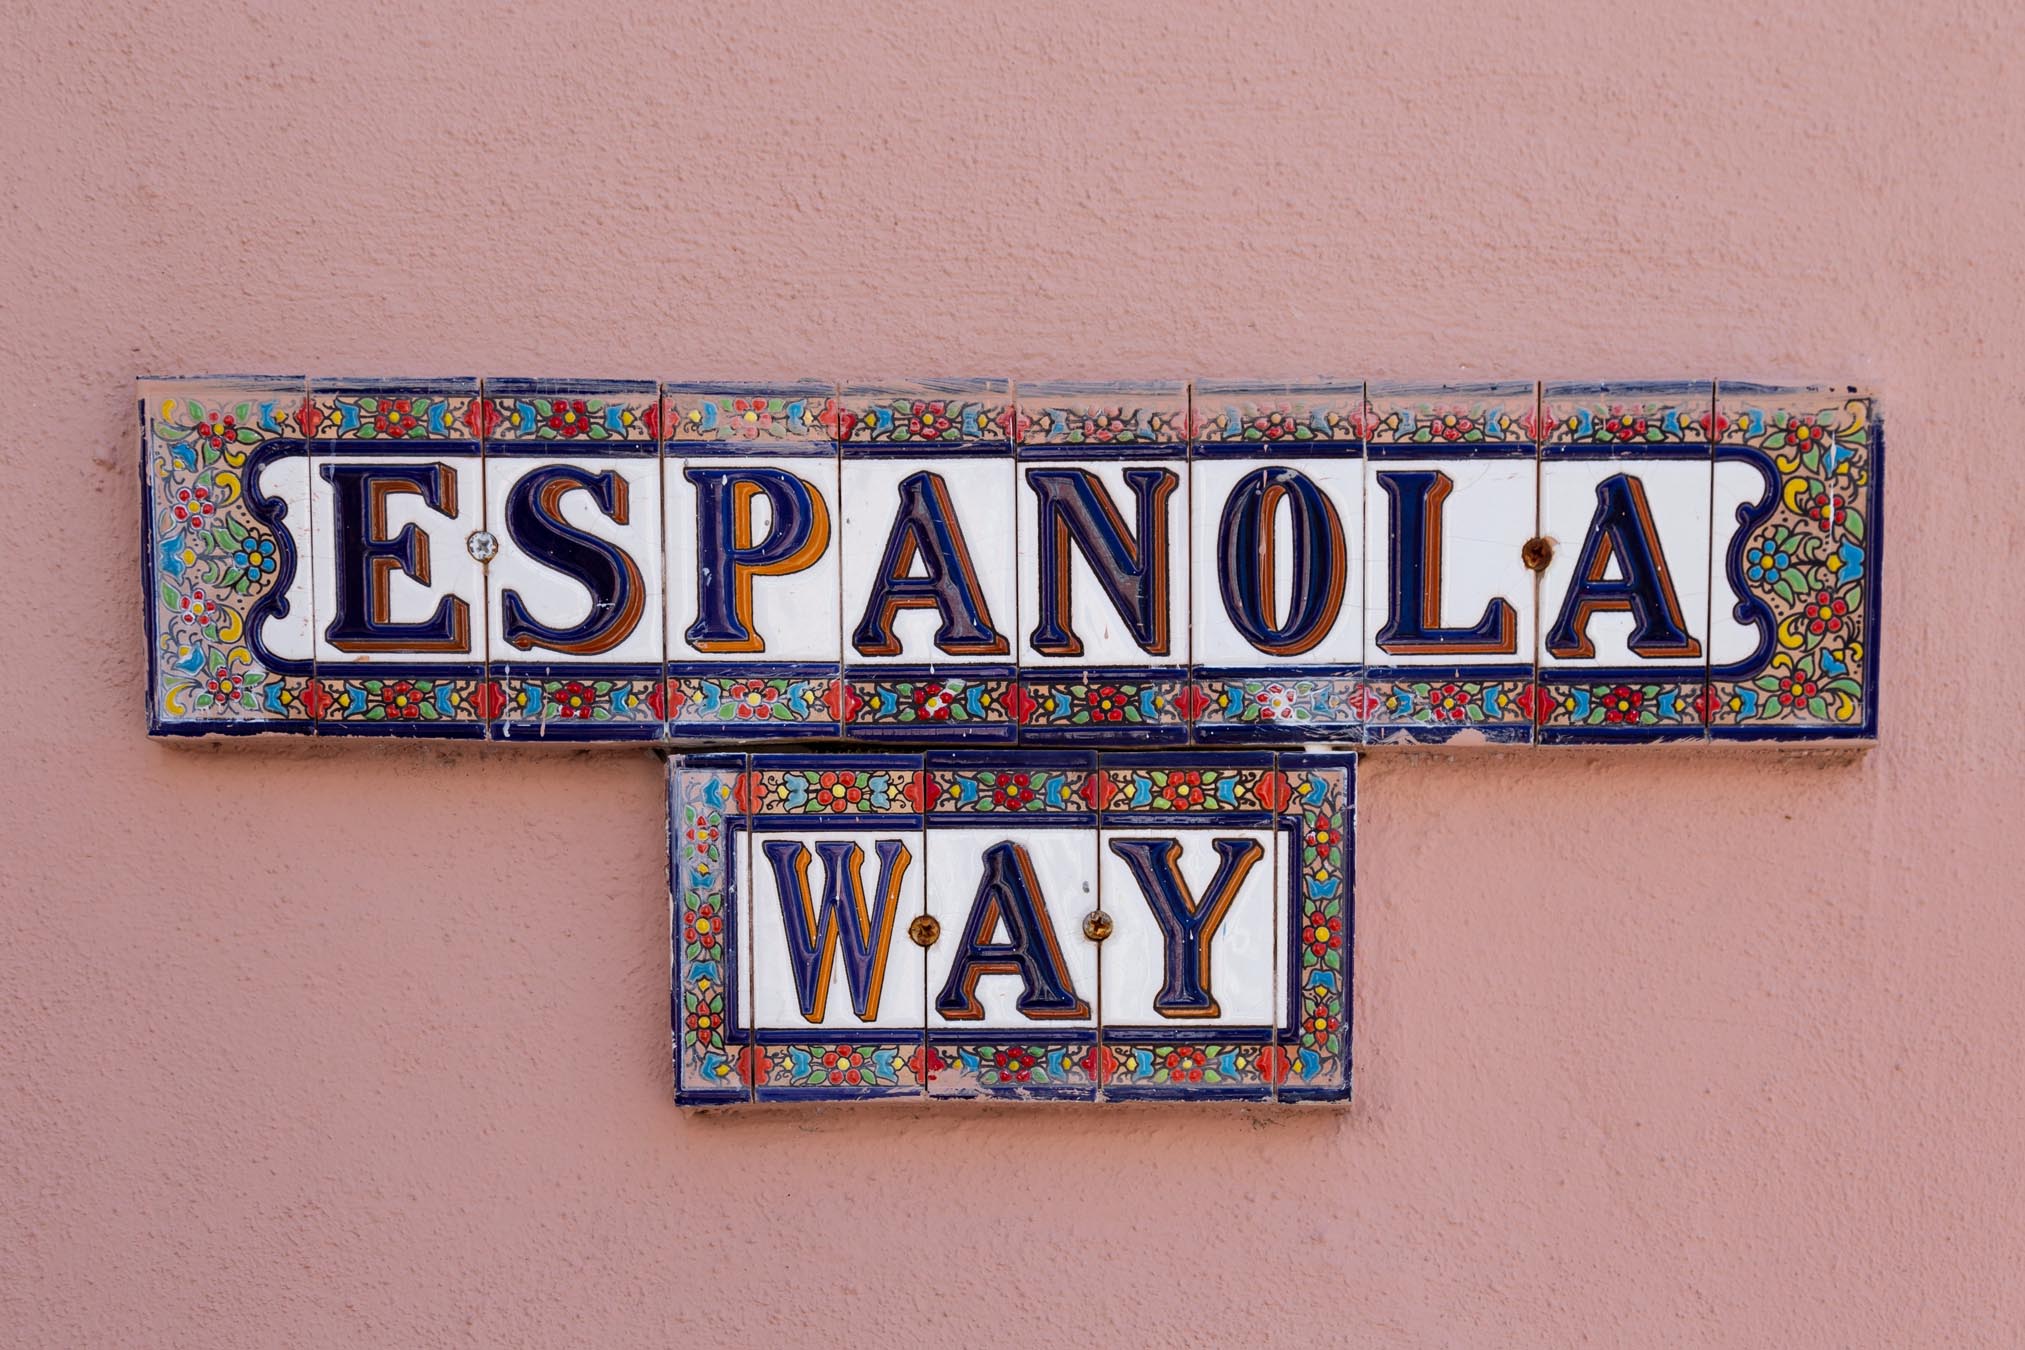 Espanola Way Sign on wall